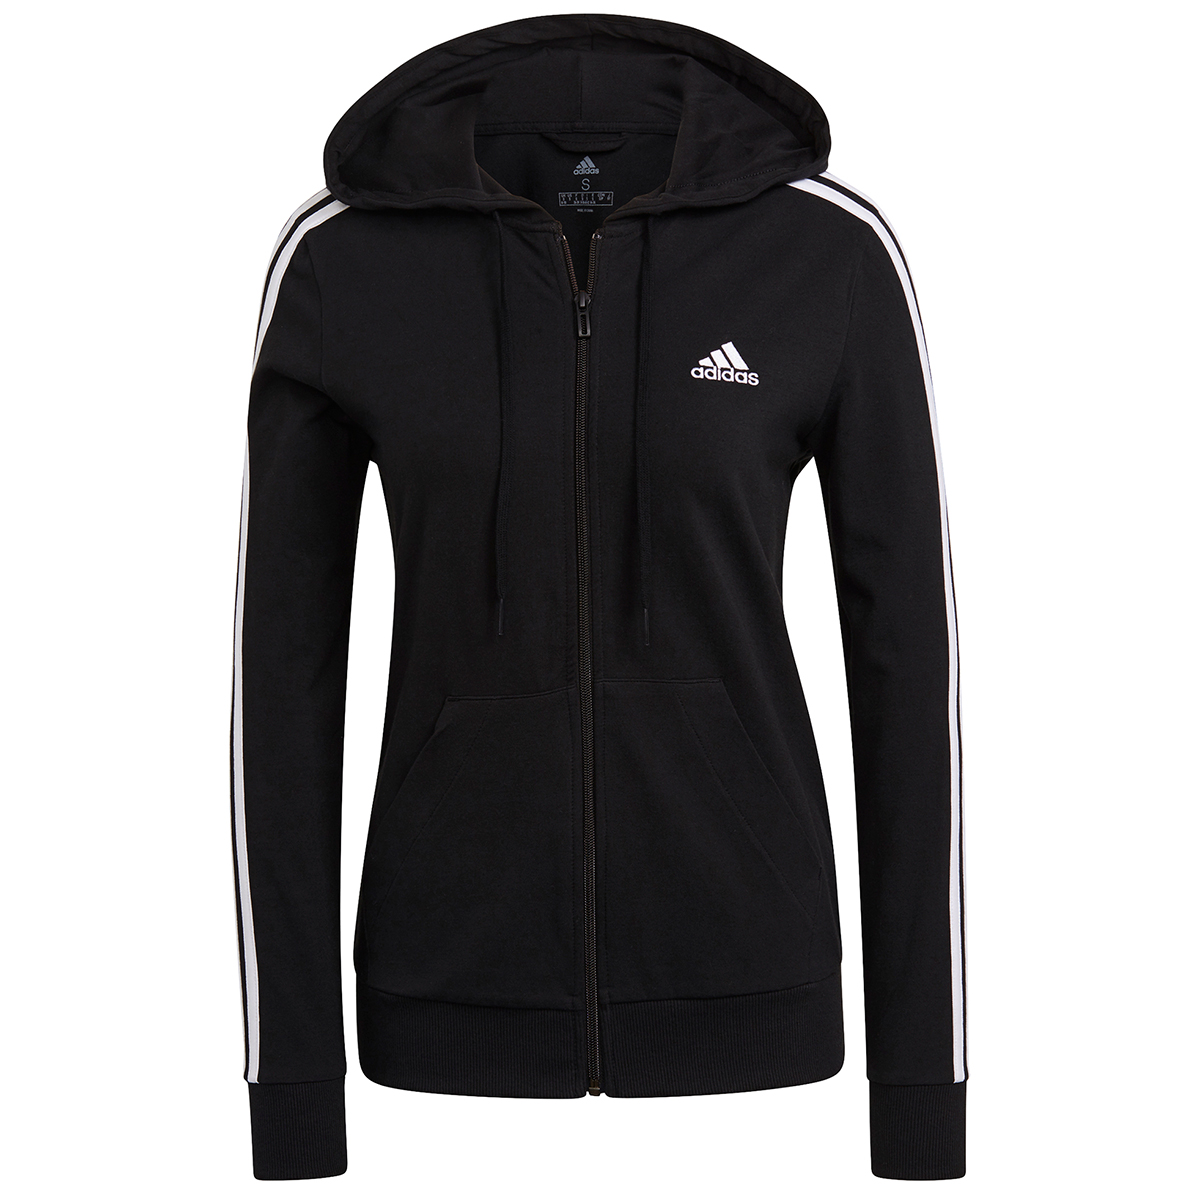 Adidas Women's Essentials 3-Stripe Full Zip Hoodie, Black